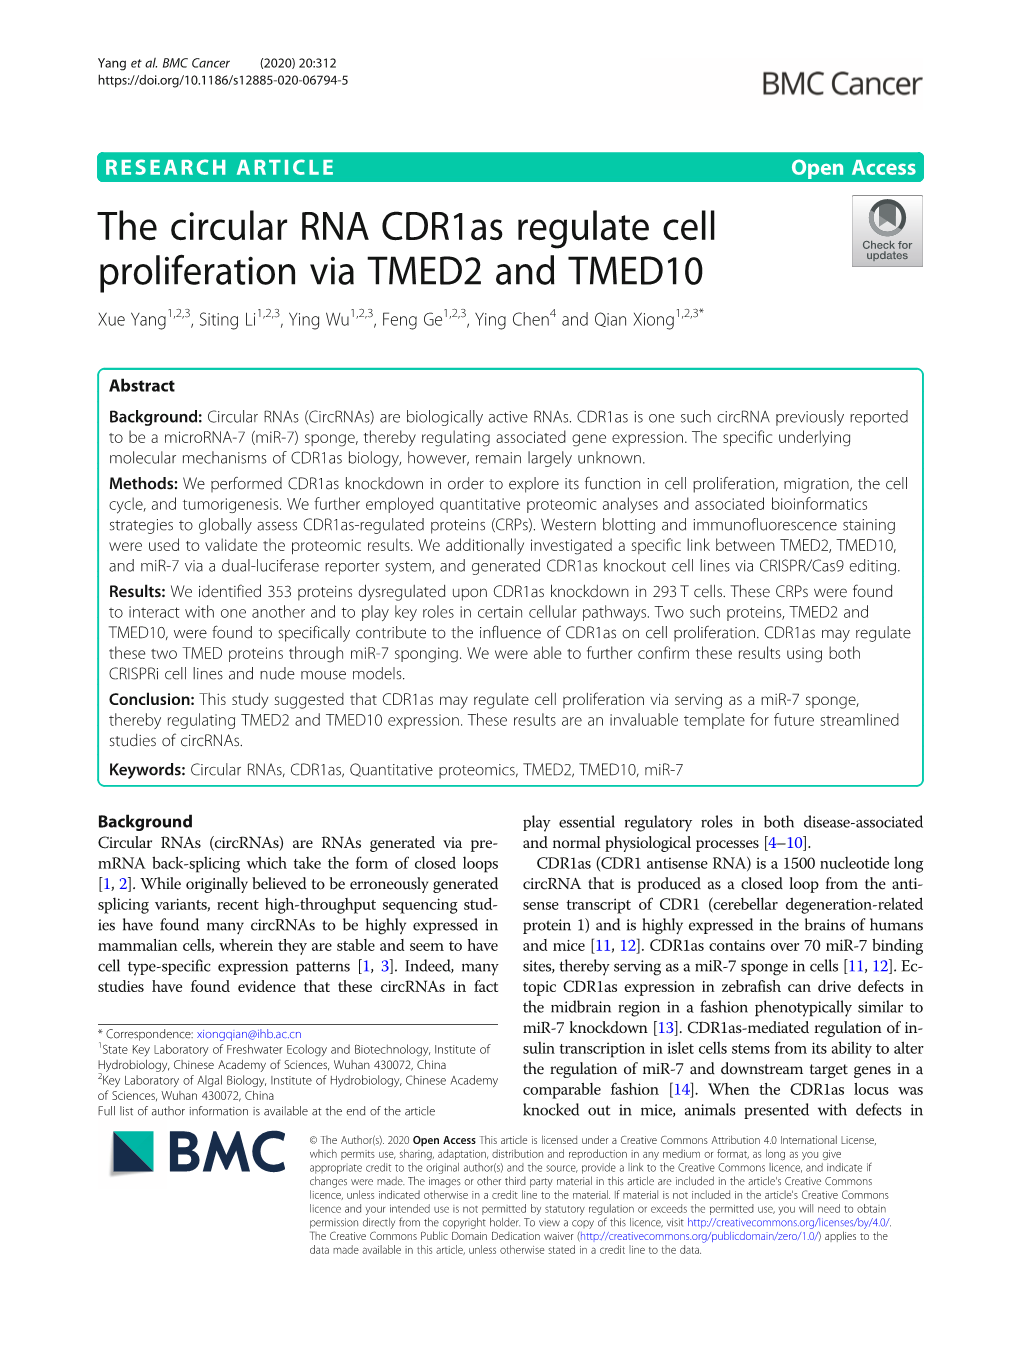 The Circular RNA Cdr1as Regulate Cell Proliferation Via TMED2 and TMED10 Xue Yang1,2,3, Siting Li1,2,3, Ying Wu1,2,3, Feng Ge1,2,3, Ying Chen4 and Qian Xiong1,2,3*